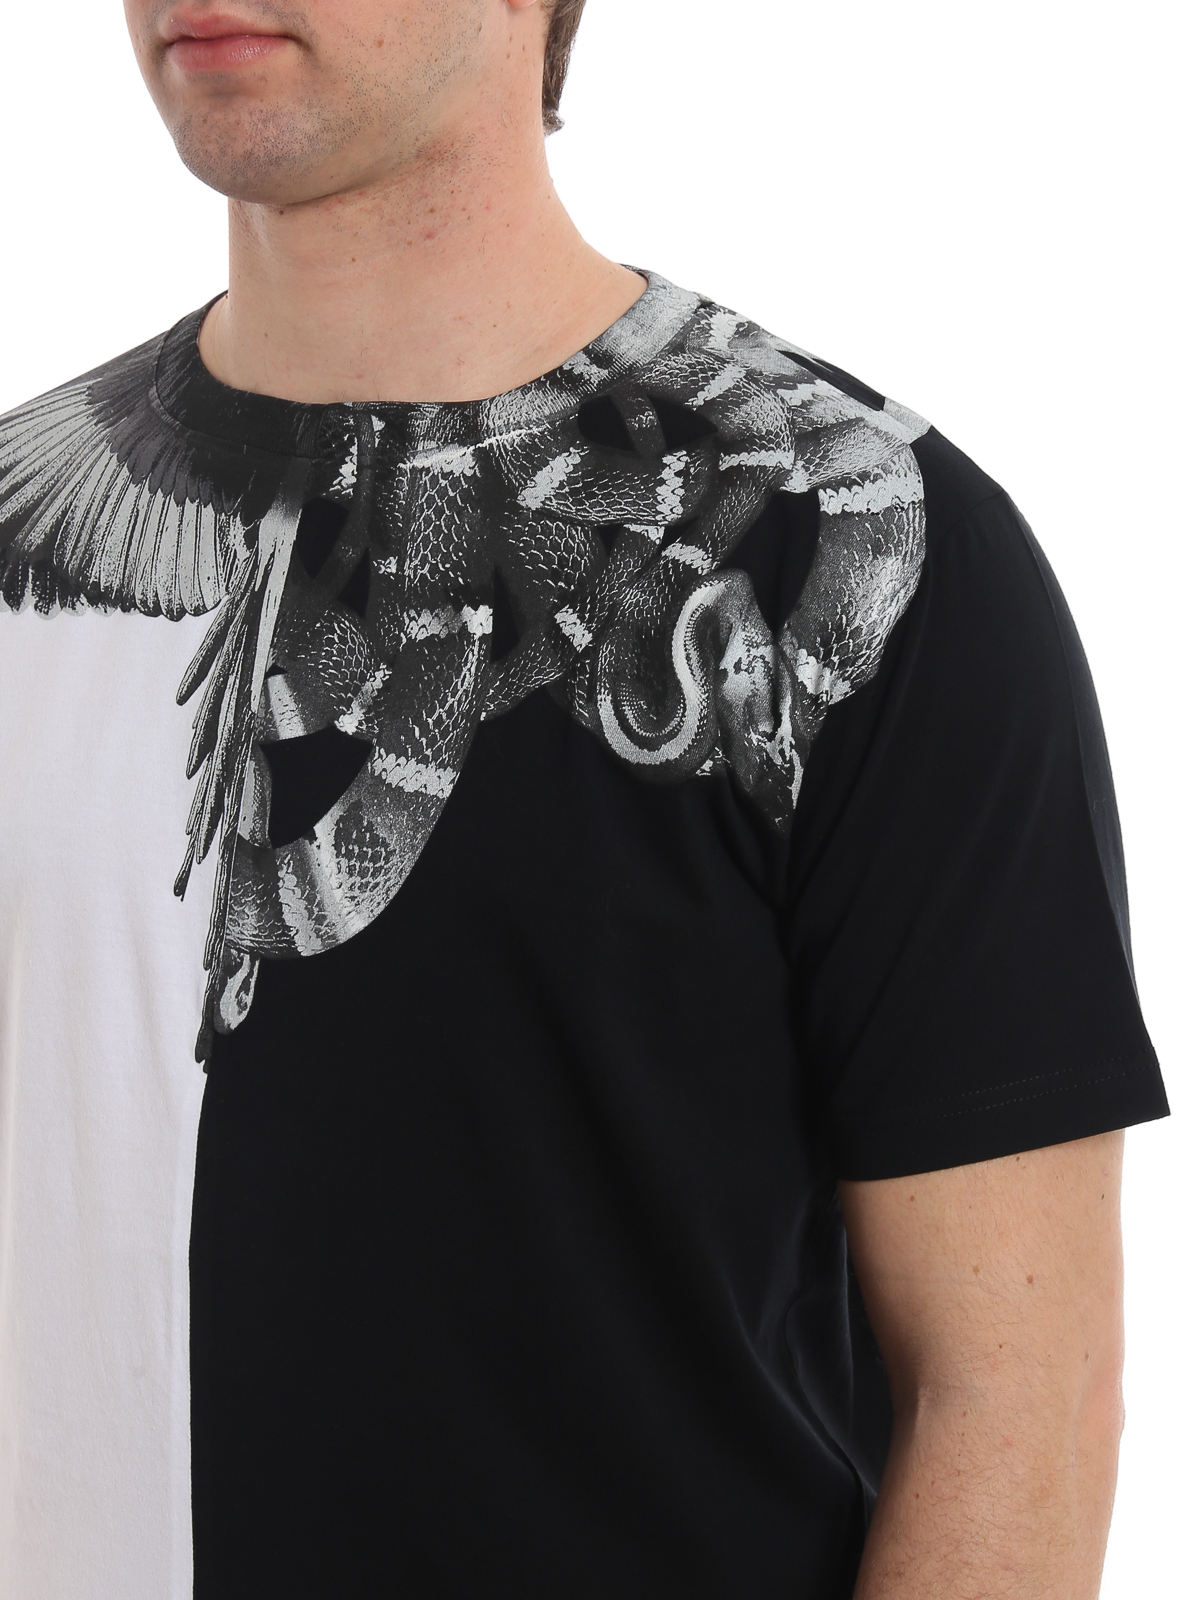 Landmand Berolige kold T-shirts Marcelo Burlon - Wings Snakes black and white T-shirt -  CMAA018R190010201091